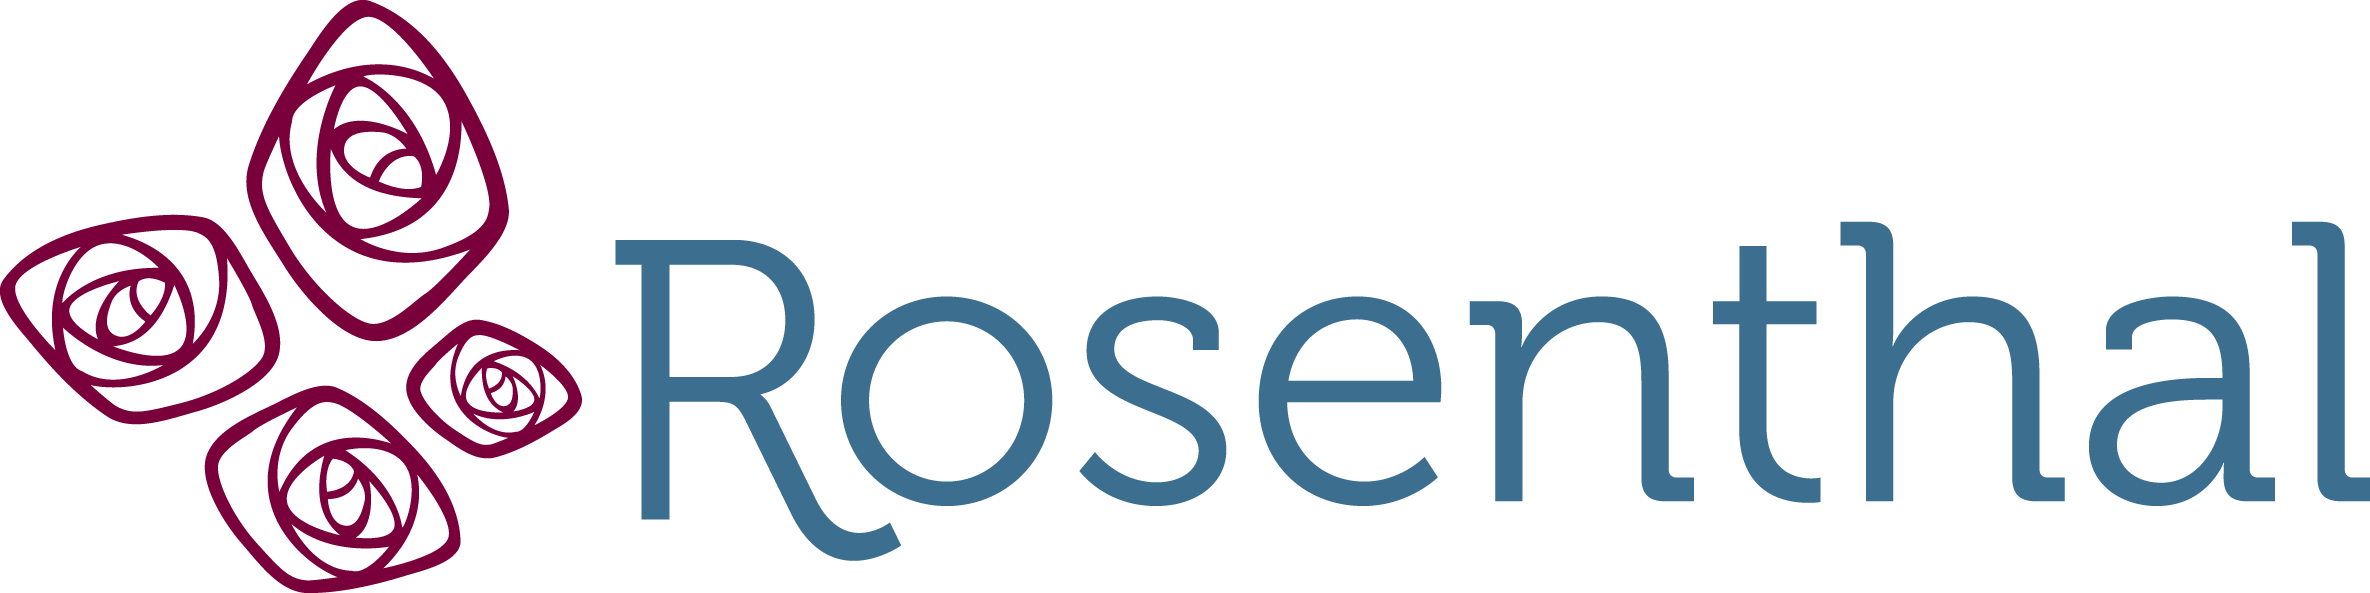 Rosenthal Logo website